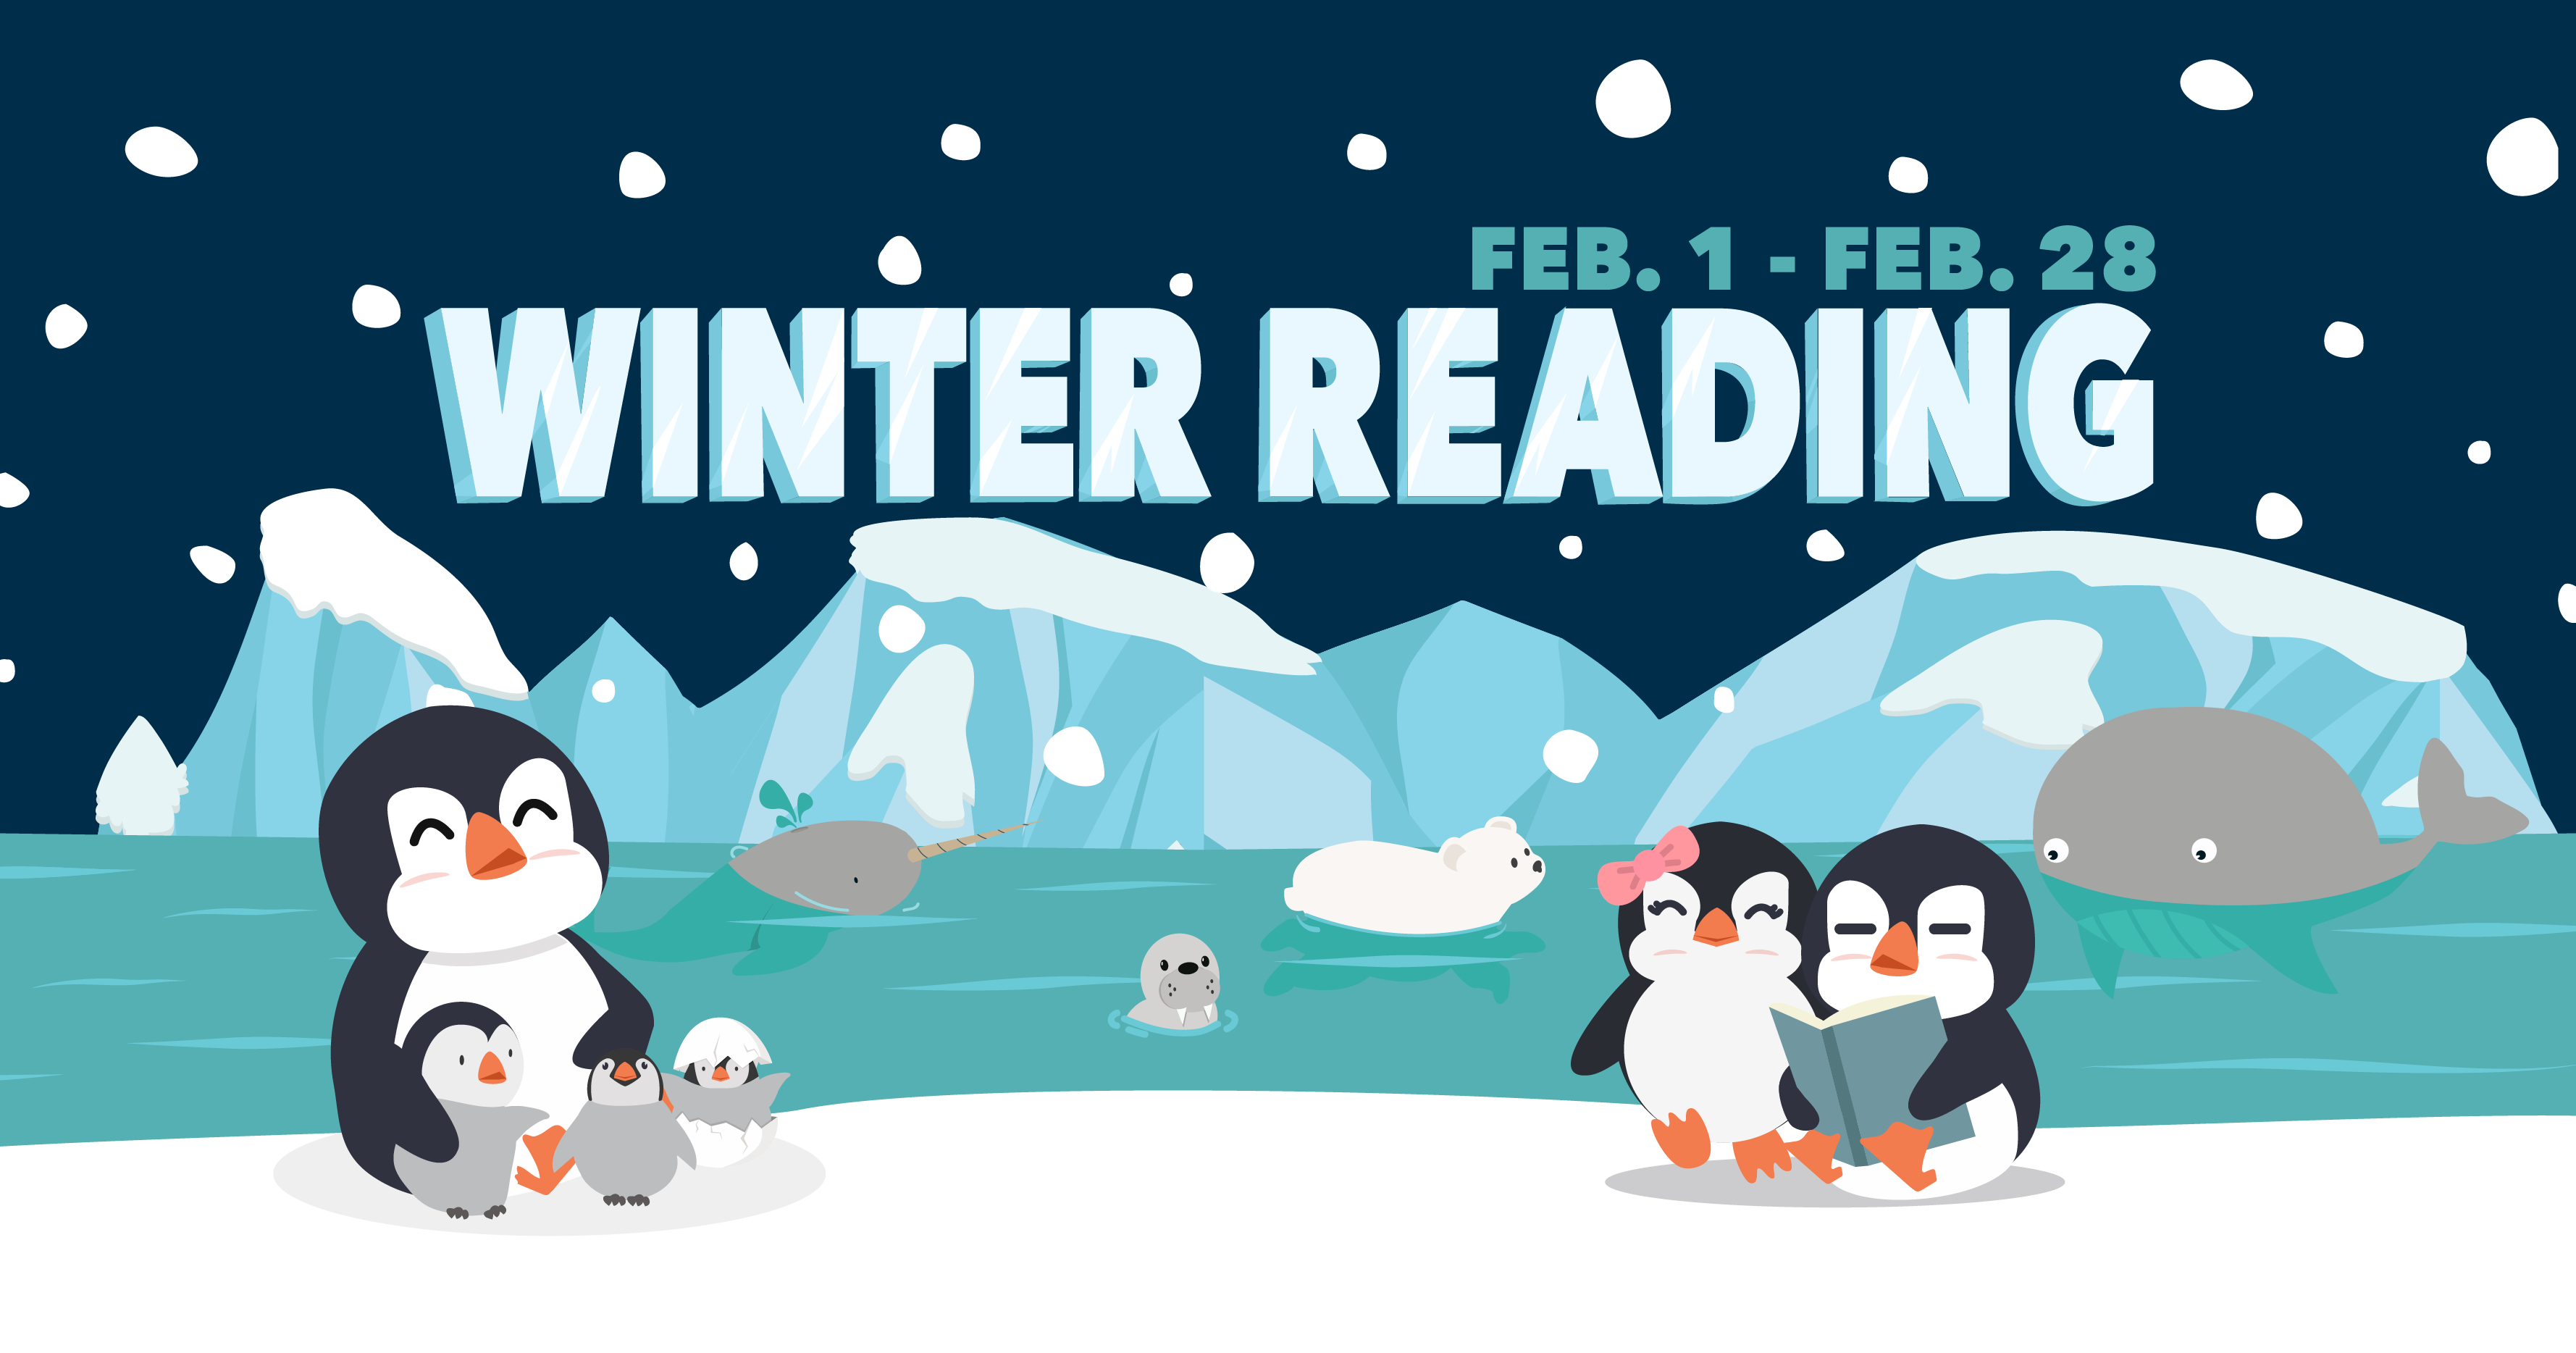 Winter Reading February 1-28